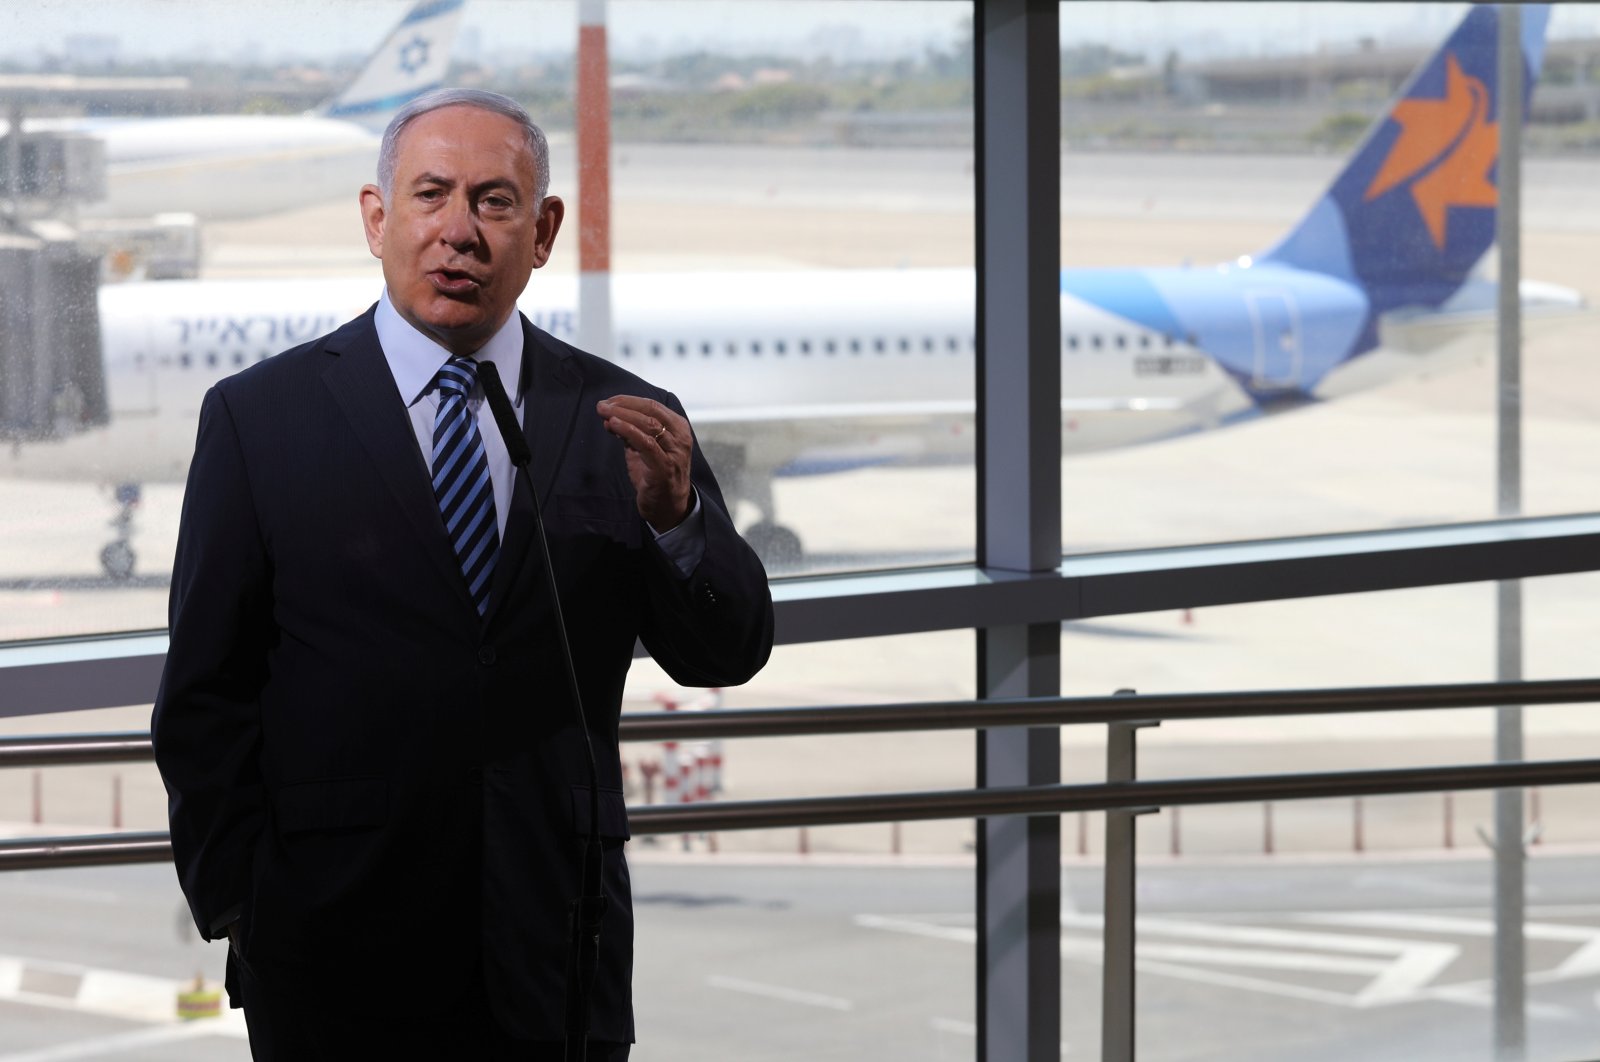 Israeli Prime Minister Benjamin Netanyahu gestures as he gives a statement at Ben Gurion International Airport, in Lod, near Tel Aviv, Israel, Aug. 17, 2020. (Reuters Photo)